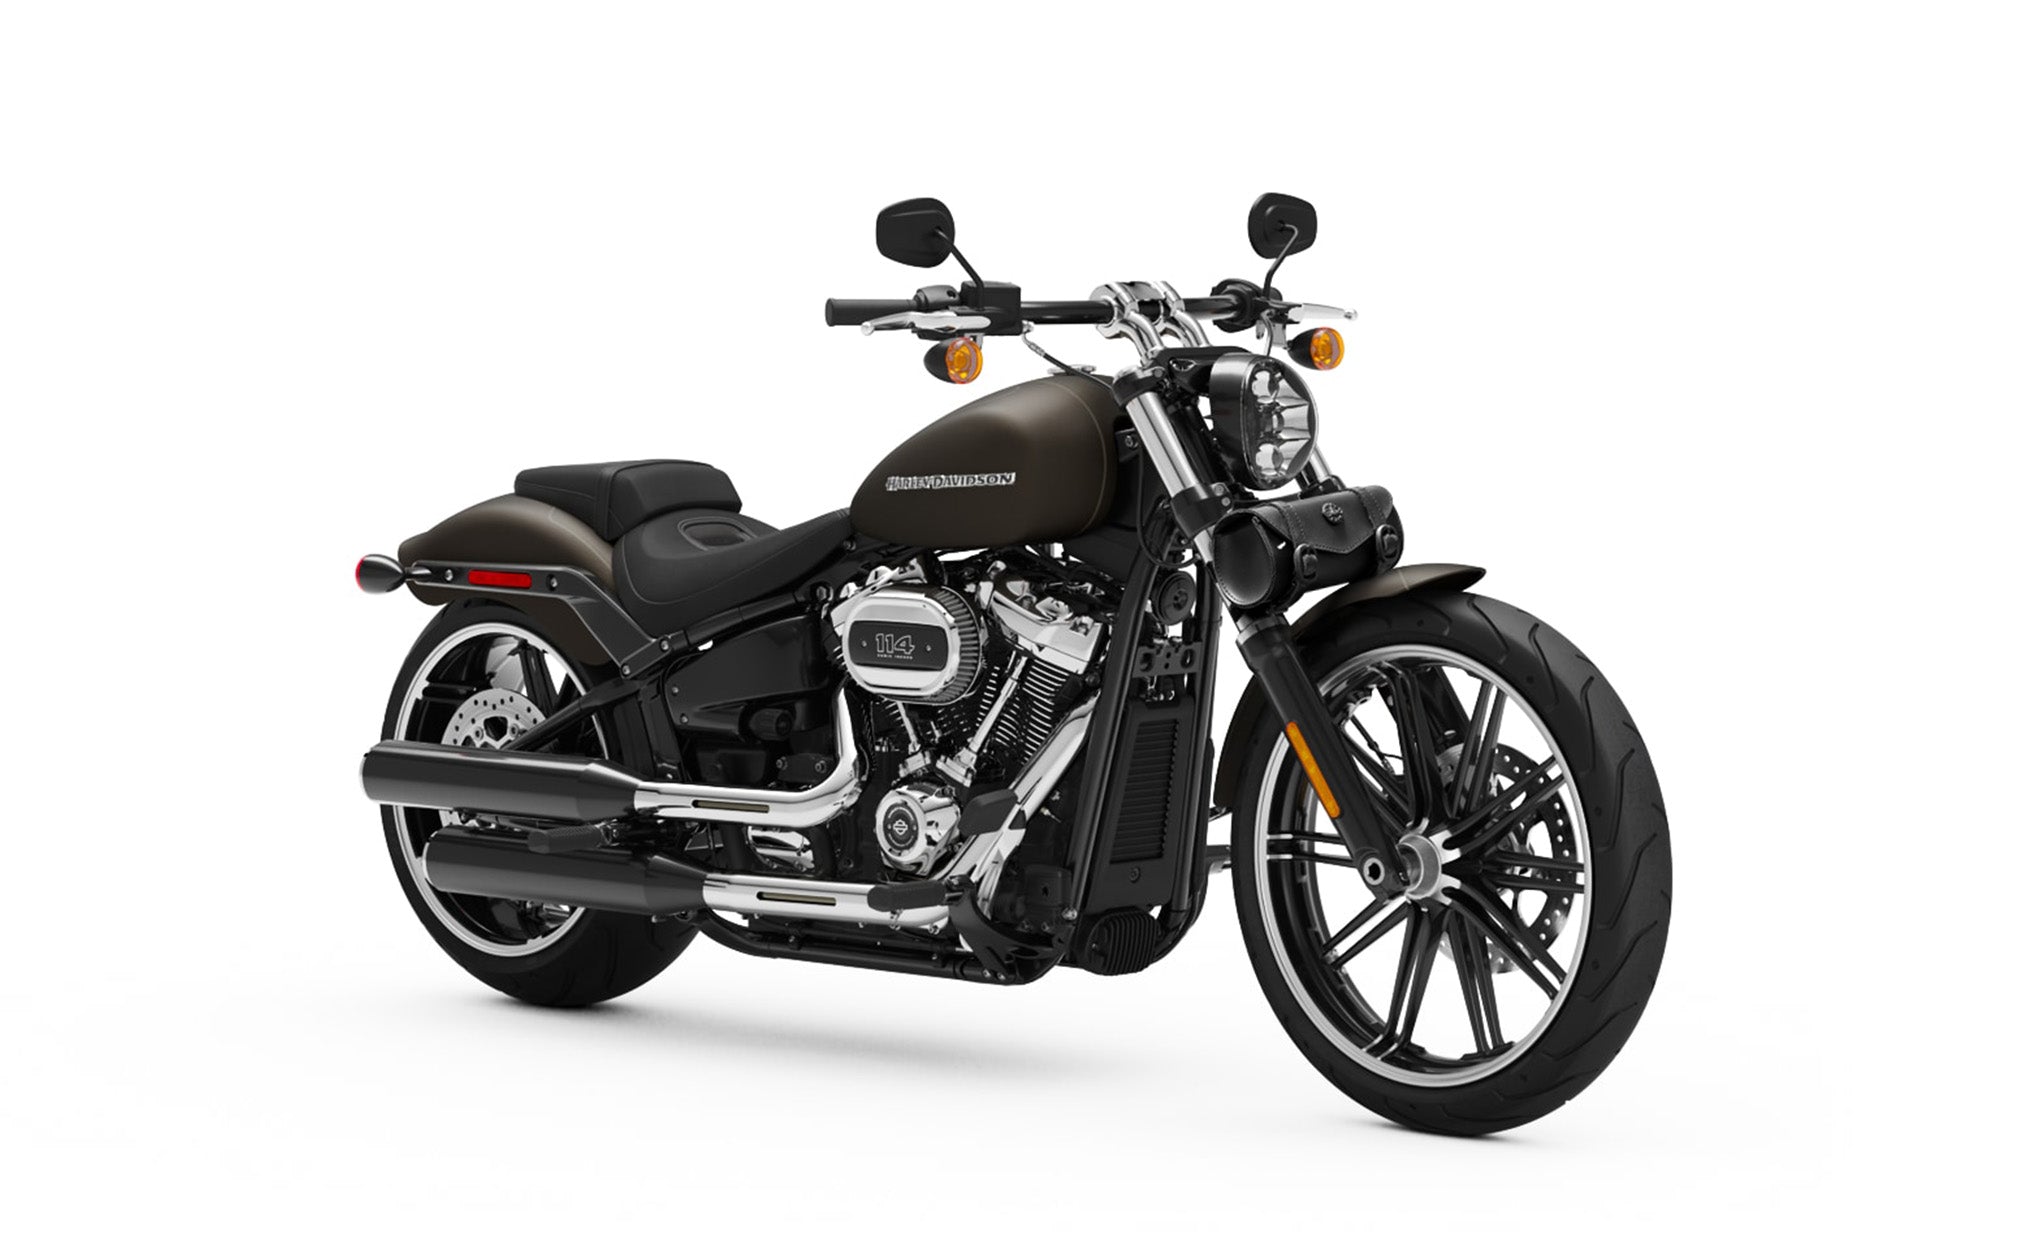 Viking Dark Age Plain Leather Motorcycle Tool Bag for Harley Davidson Bag on Bike View @expand